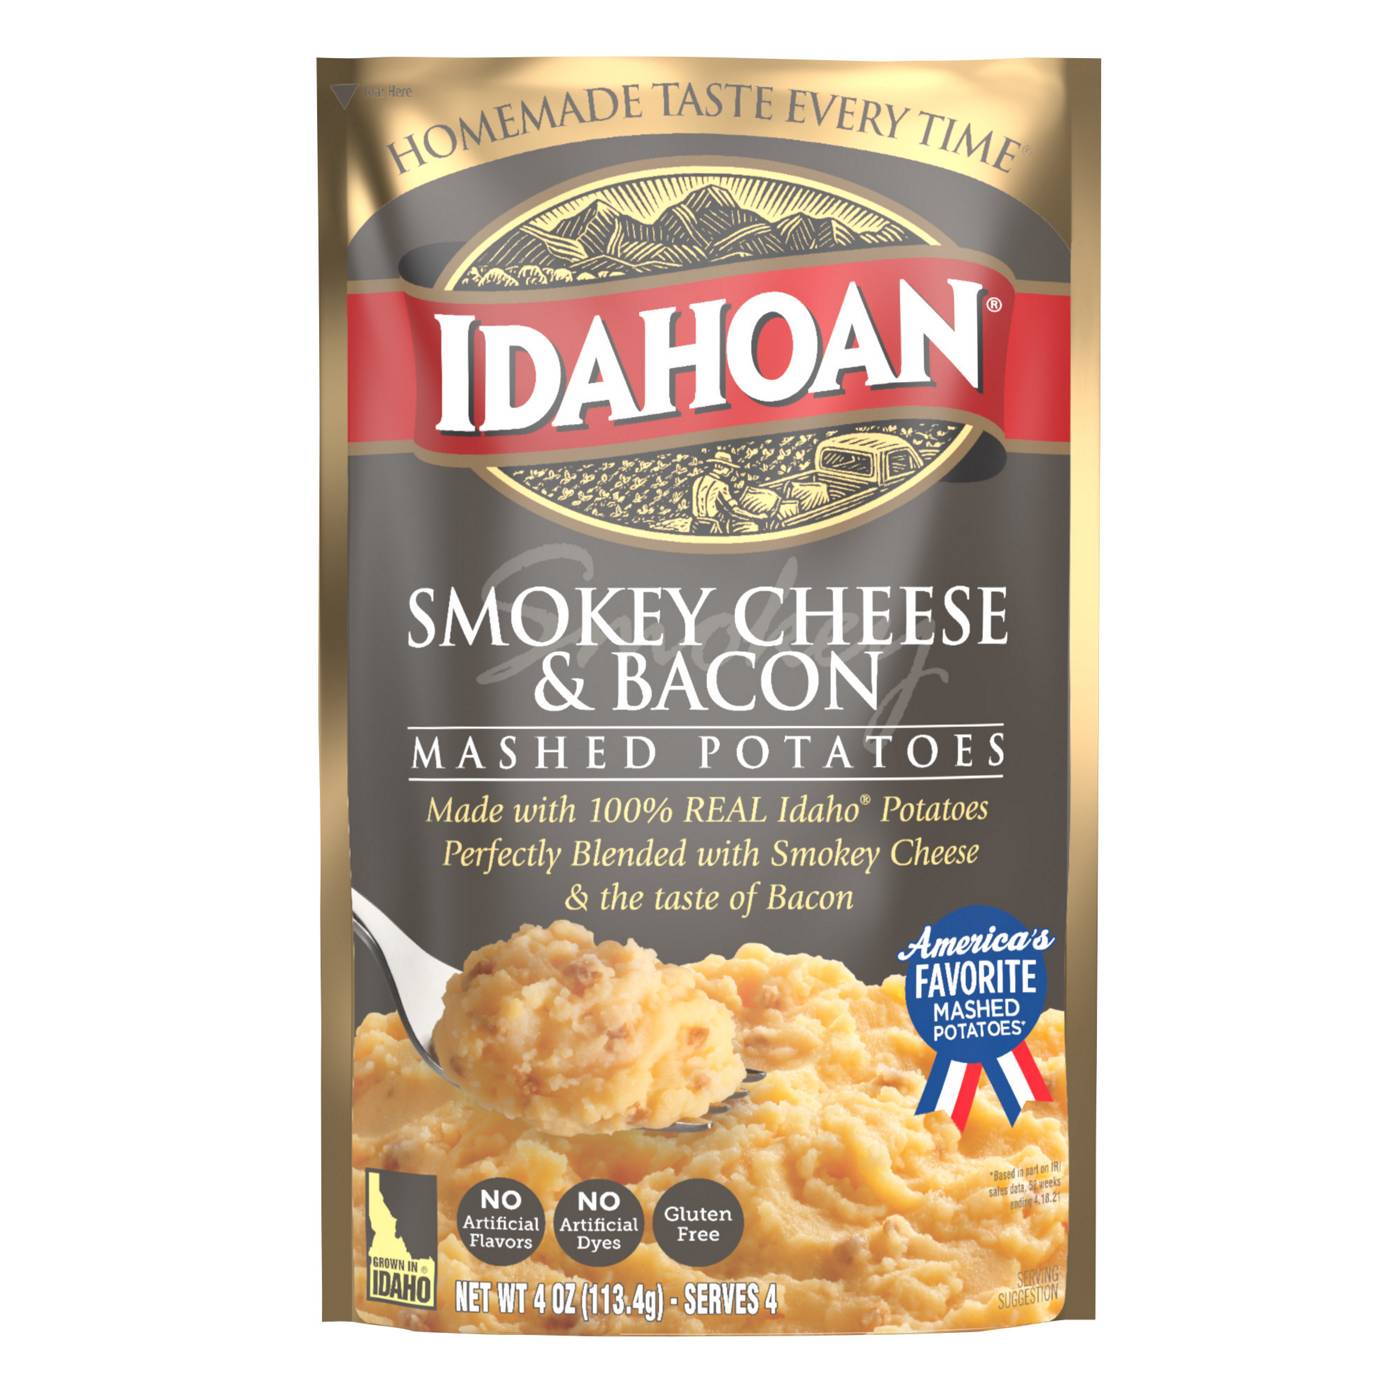 Idahoan Smokey Cheese & Bacon Mashed Potatoes; image 1 of 4